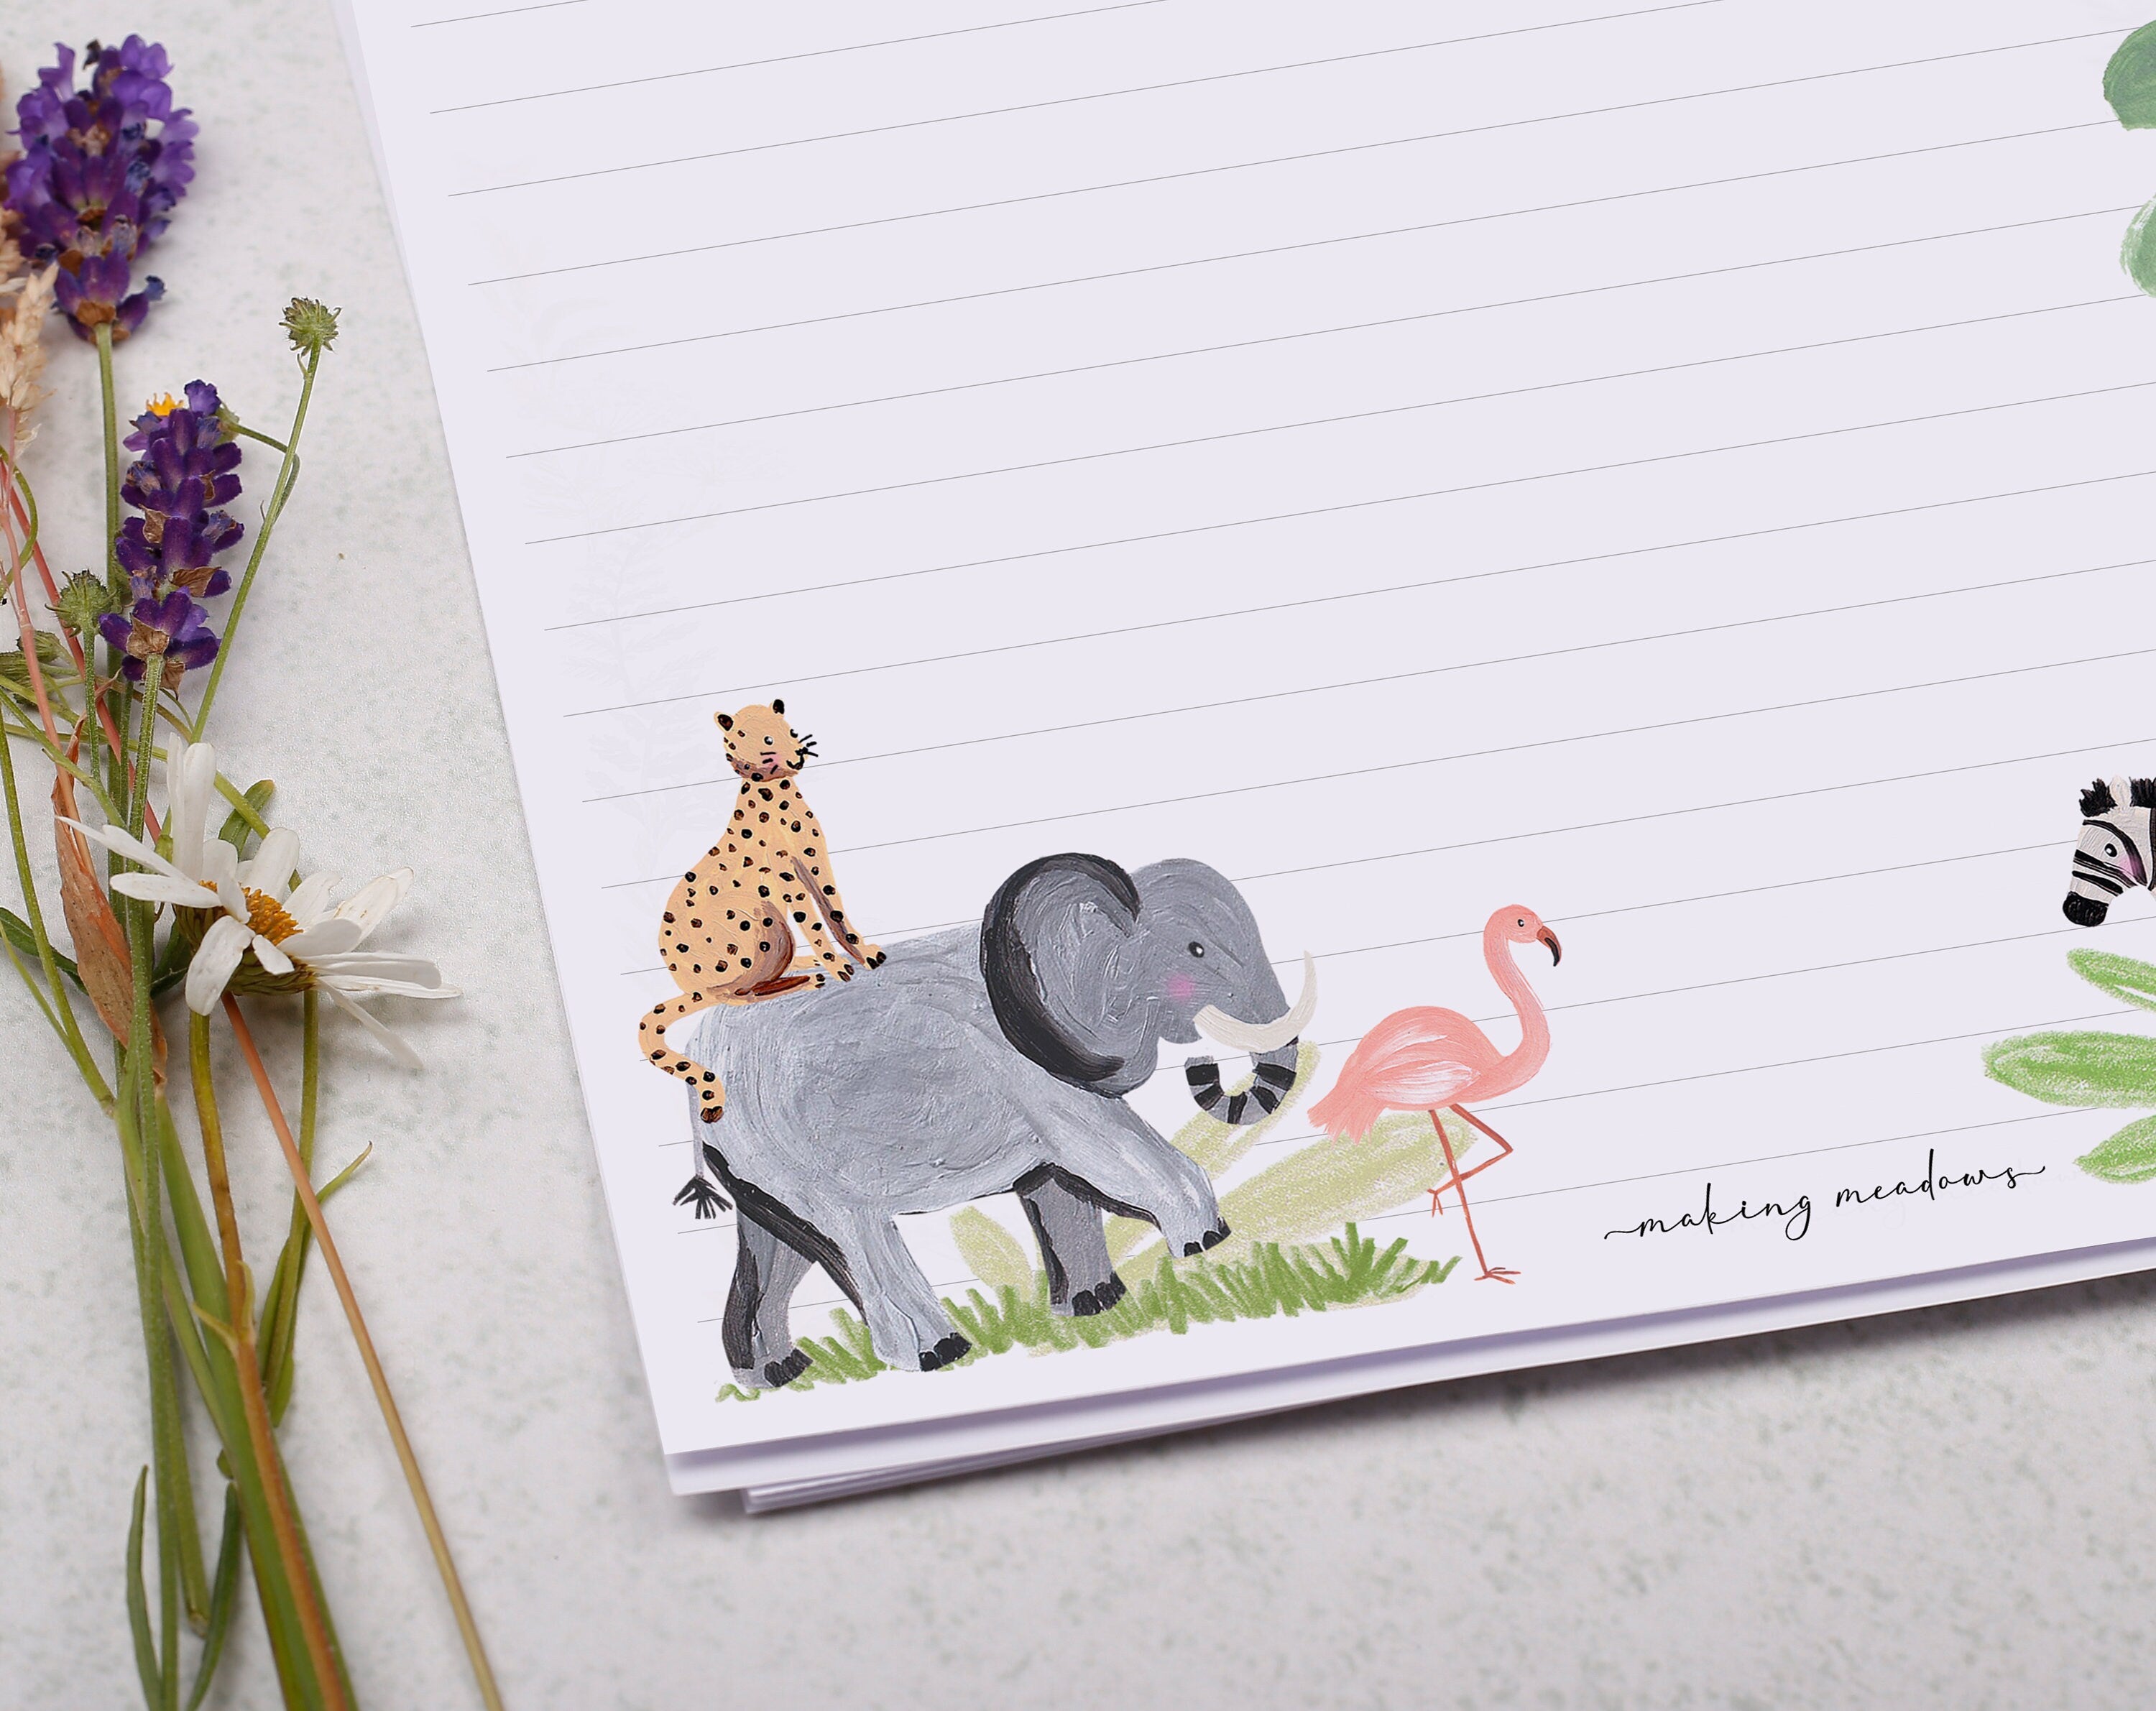 A4 writing paper with safari jungle animals